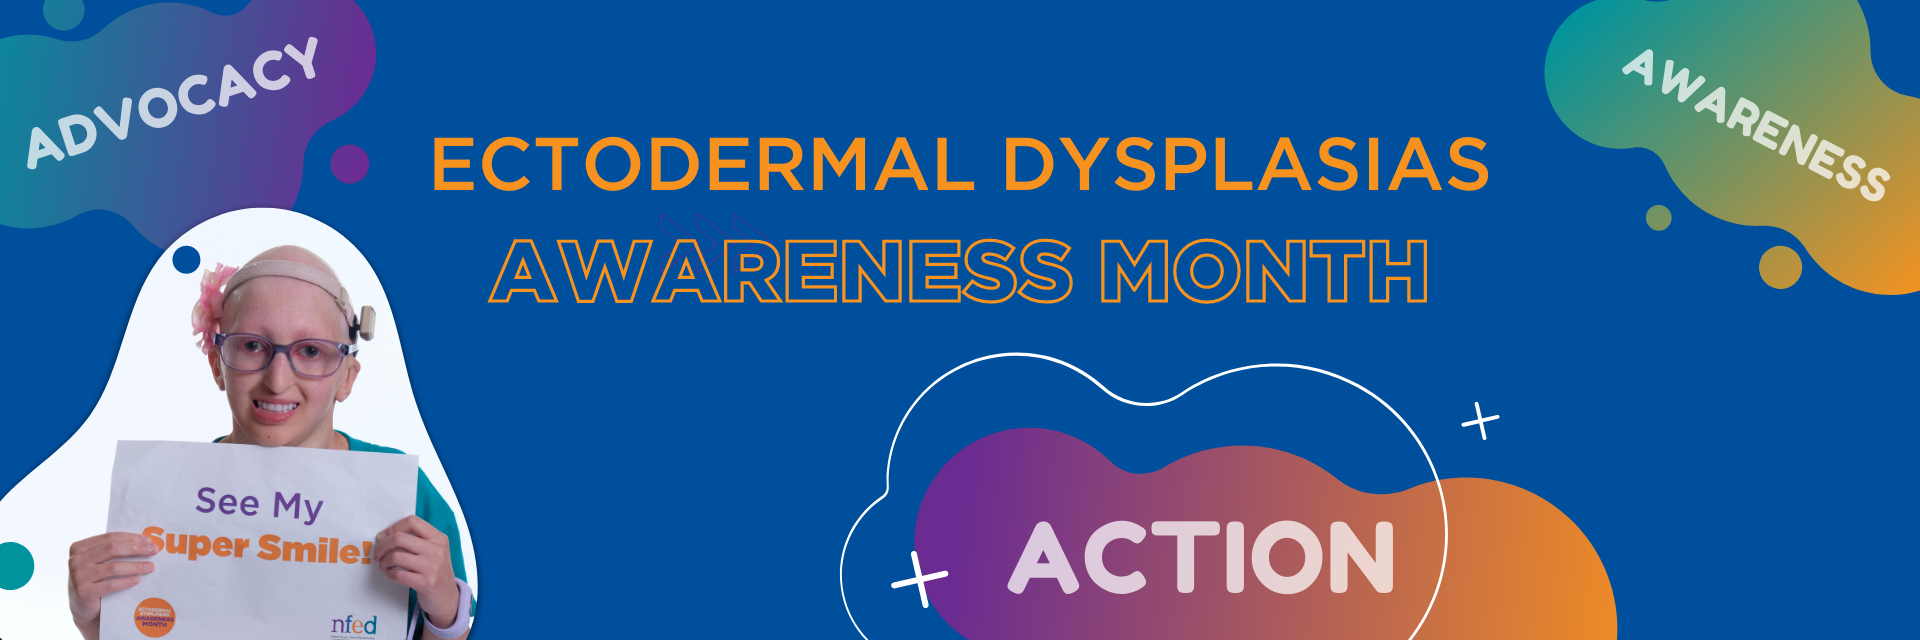 Ectodermal Dysplasias Awareness Month